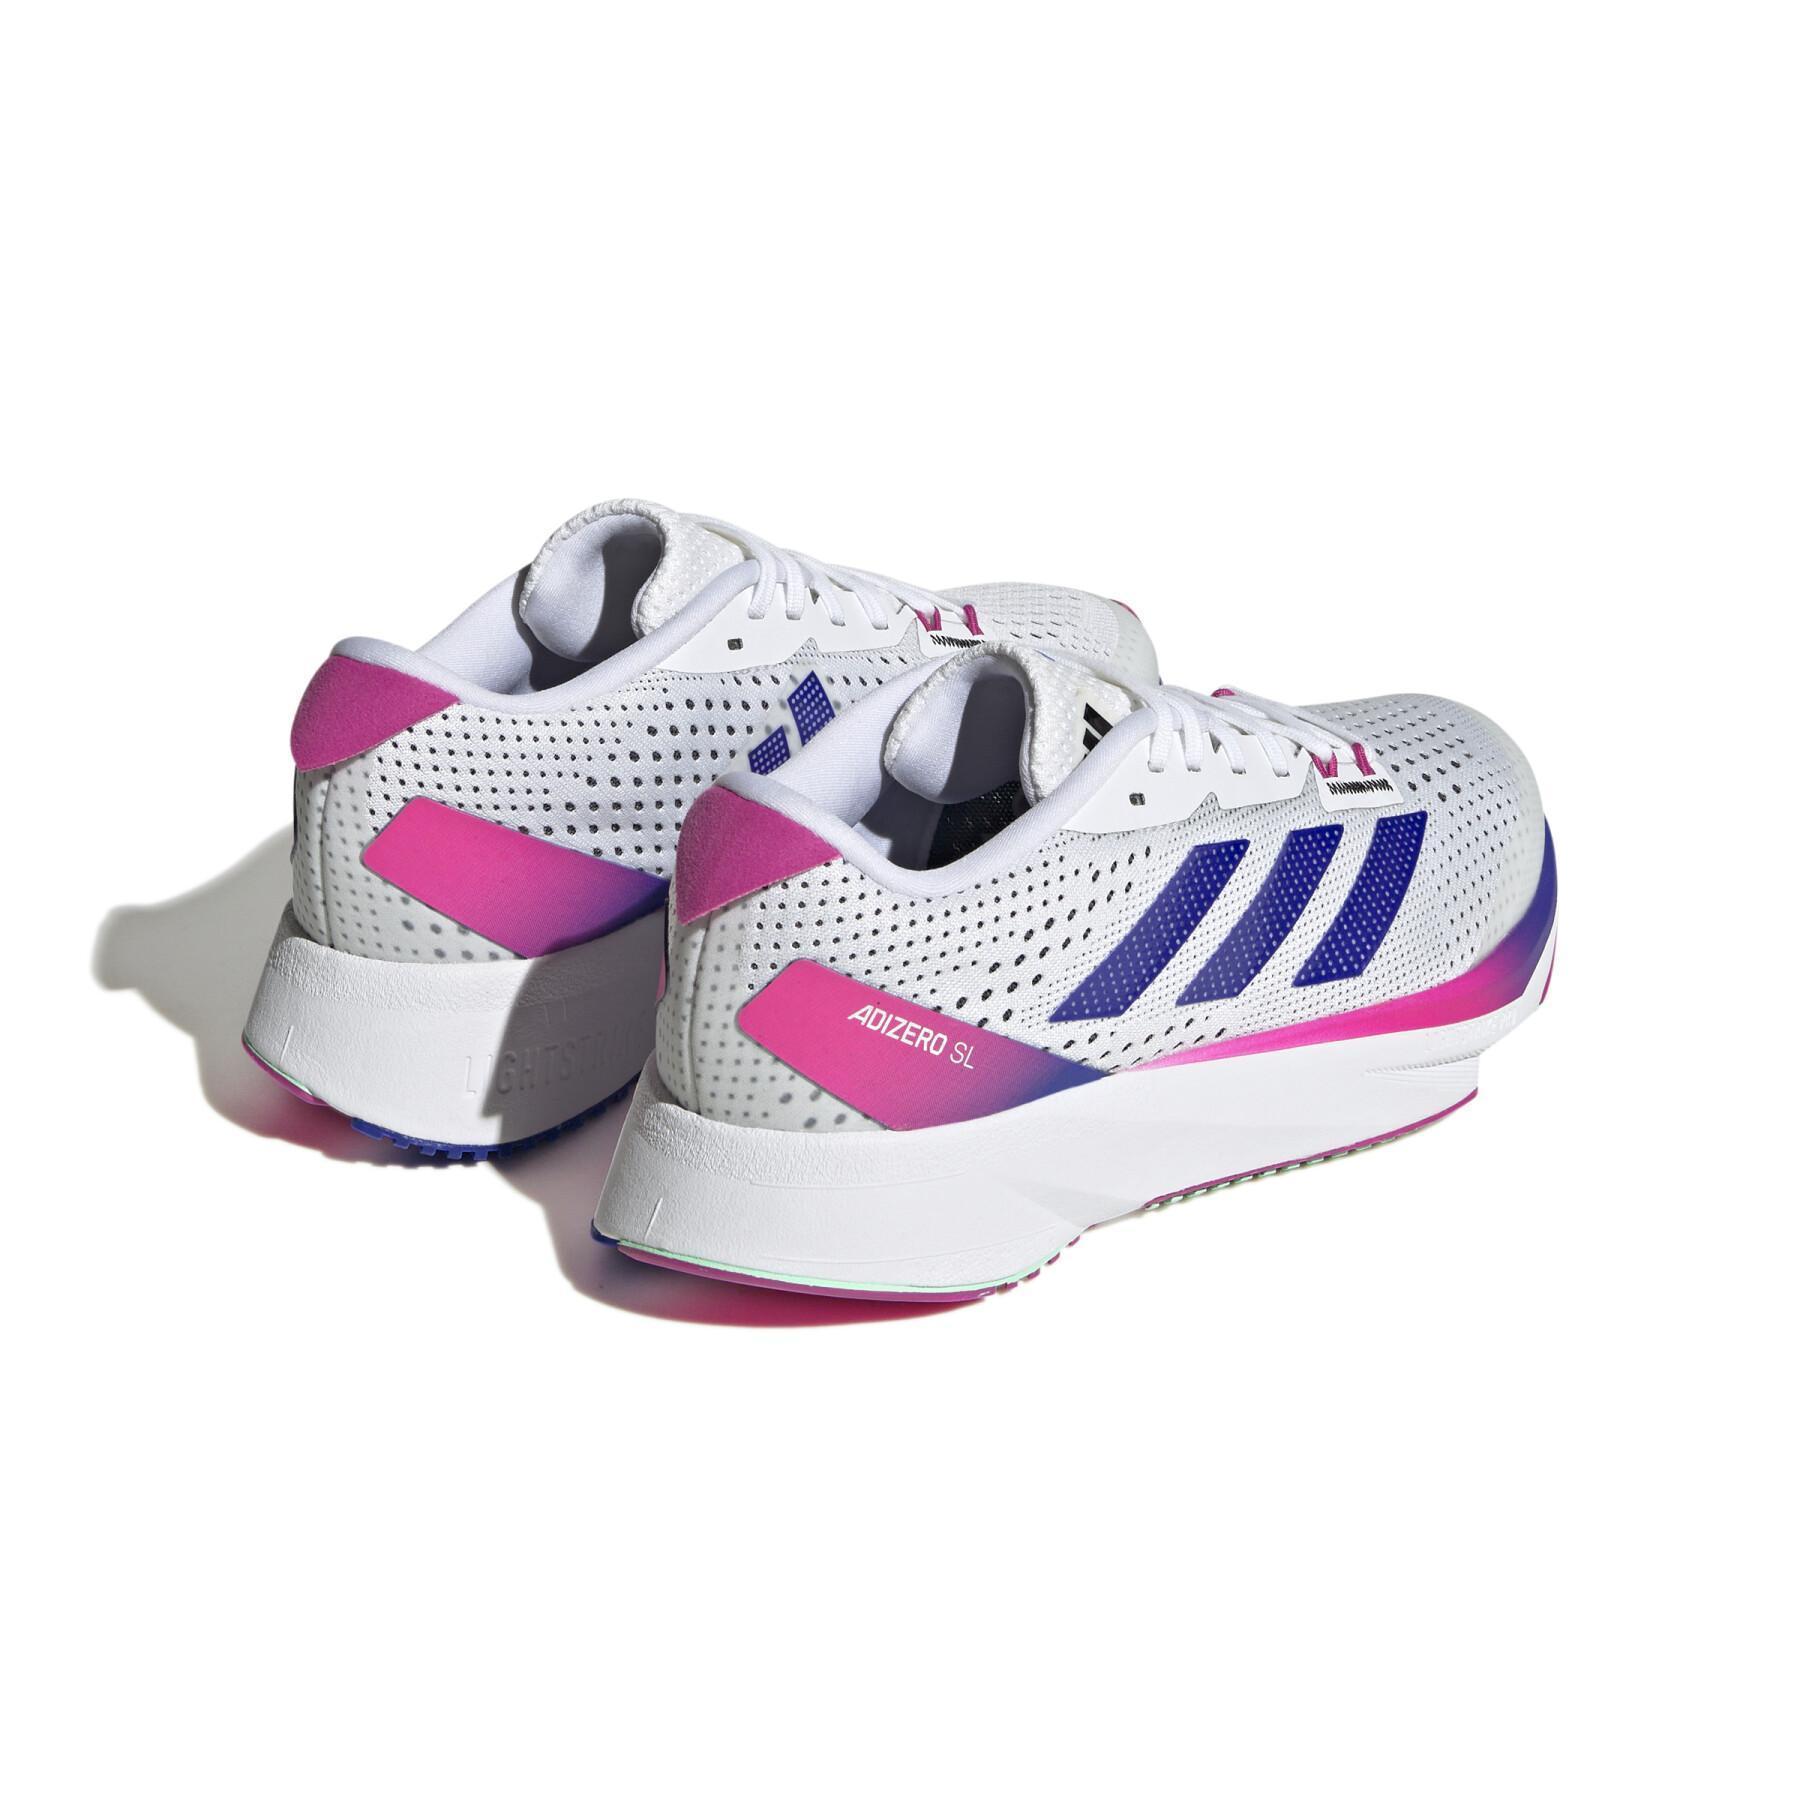 Children's running shoes adidas Adizero SL